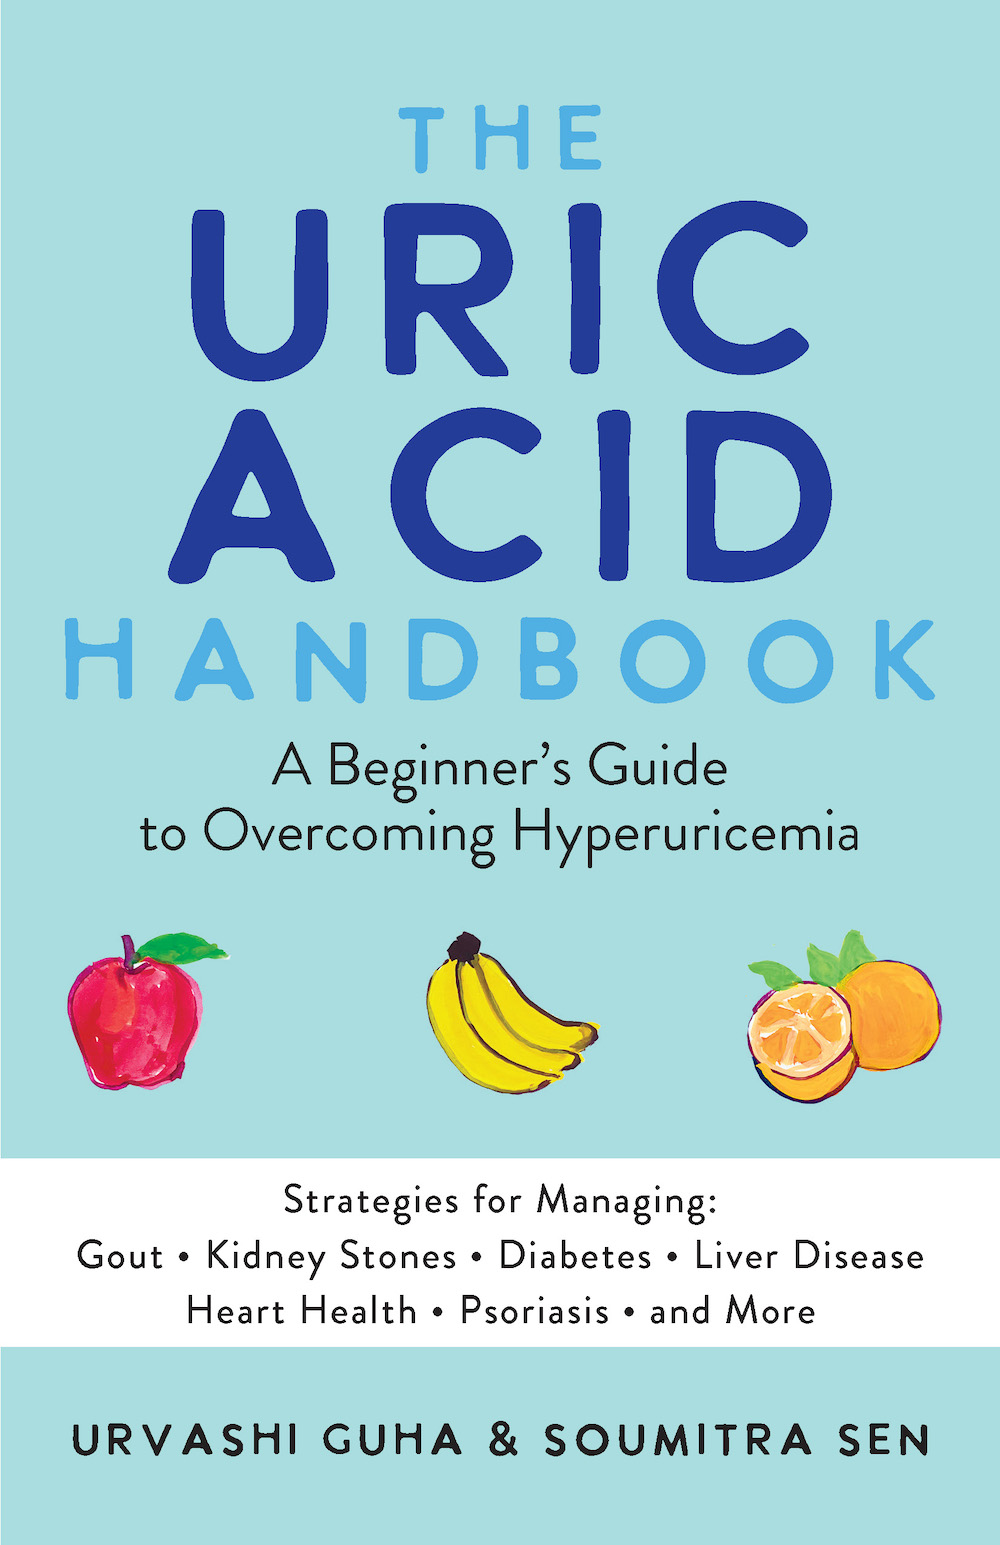 Hyperuricemia in the Uric Acid Handbook